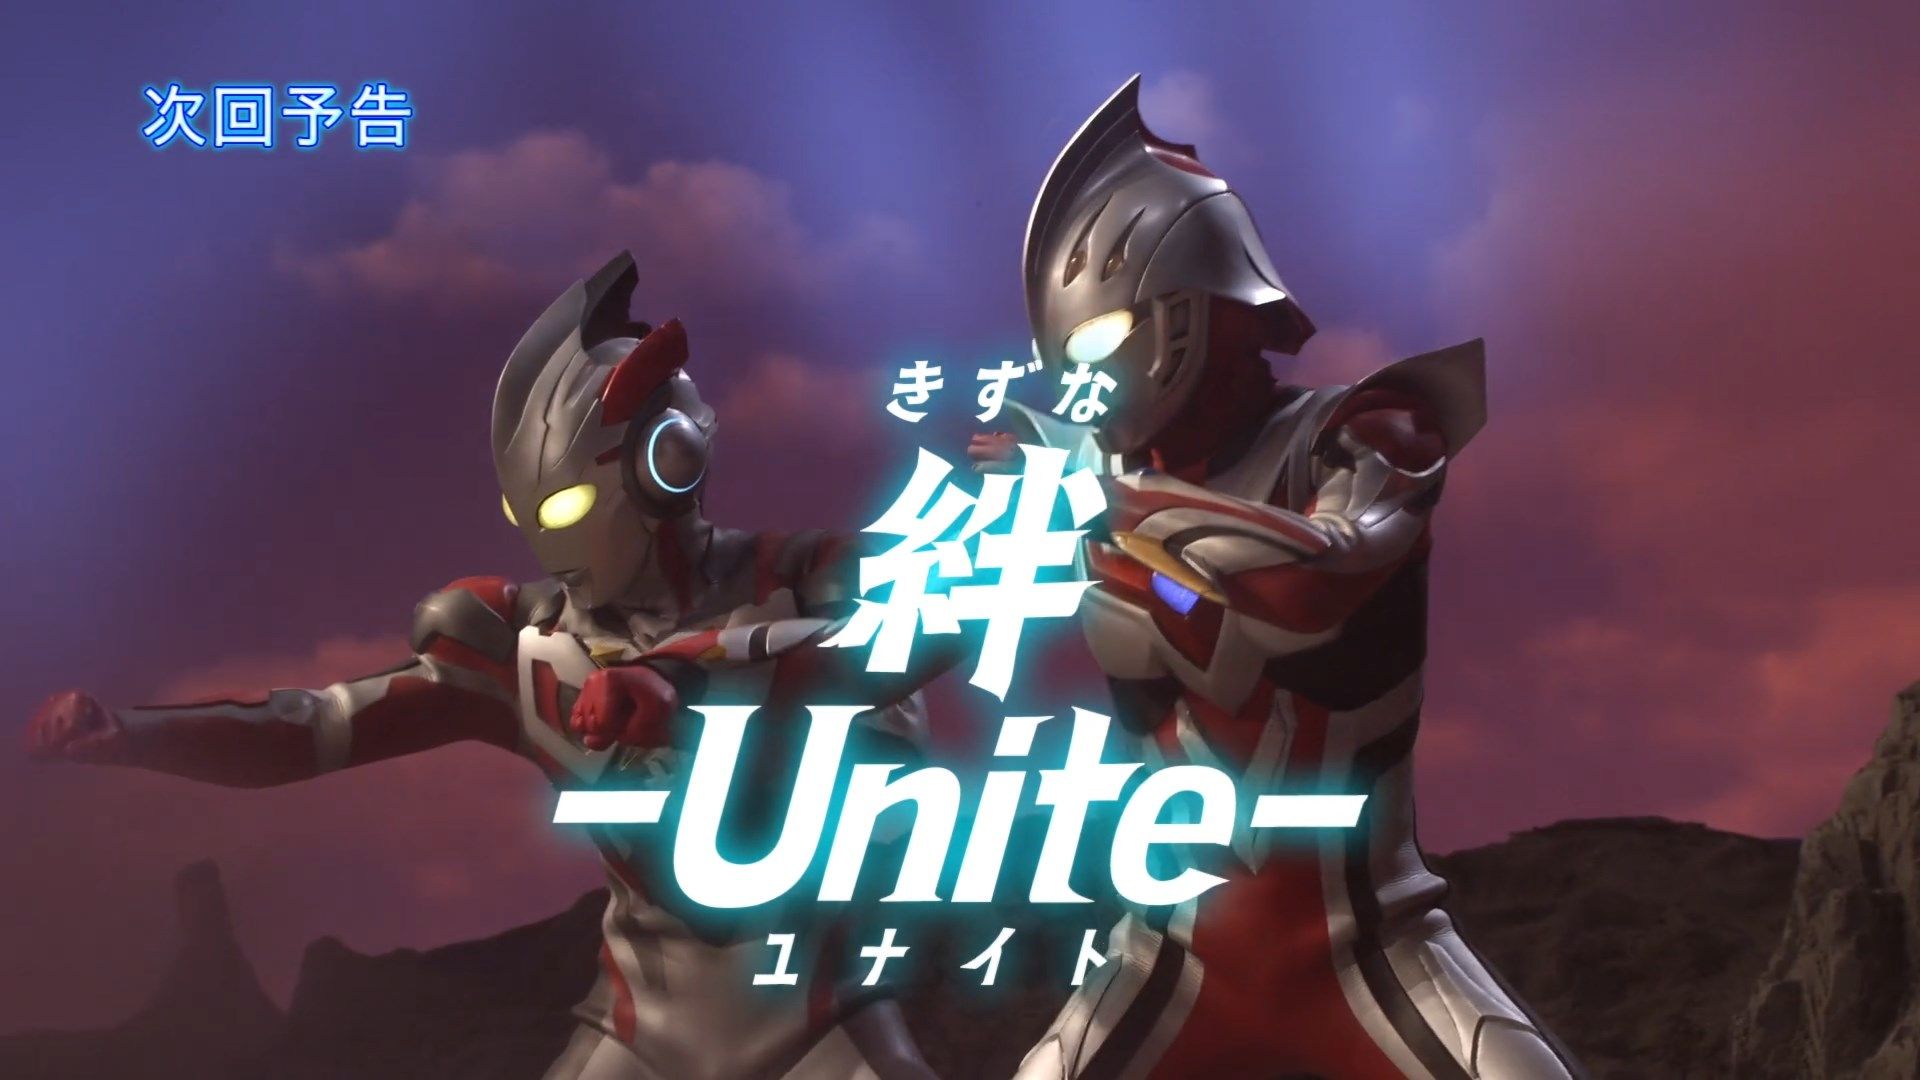 Next Time on Ultraman X: Episode 20 Tokusatsu Network